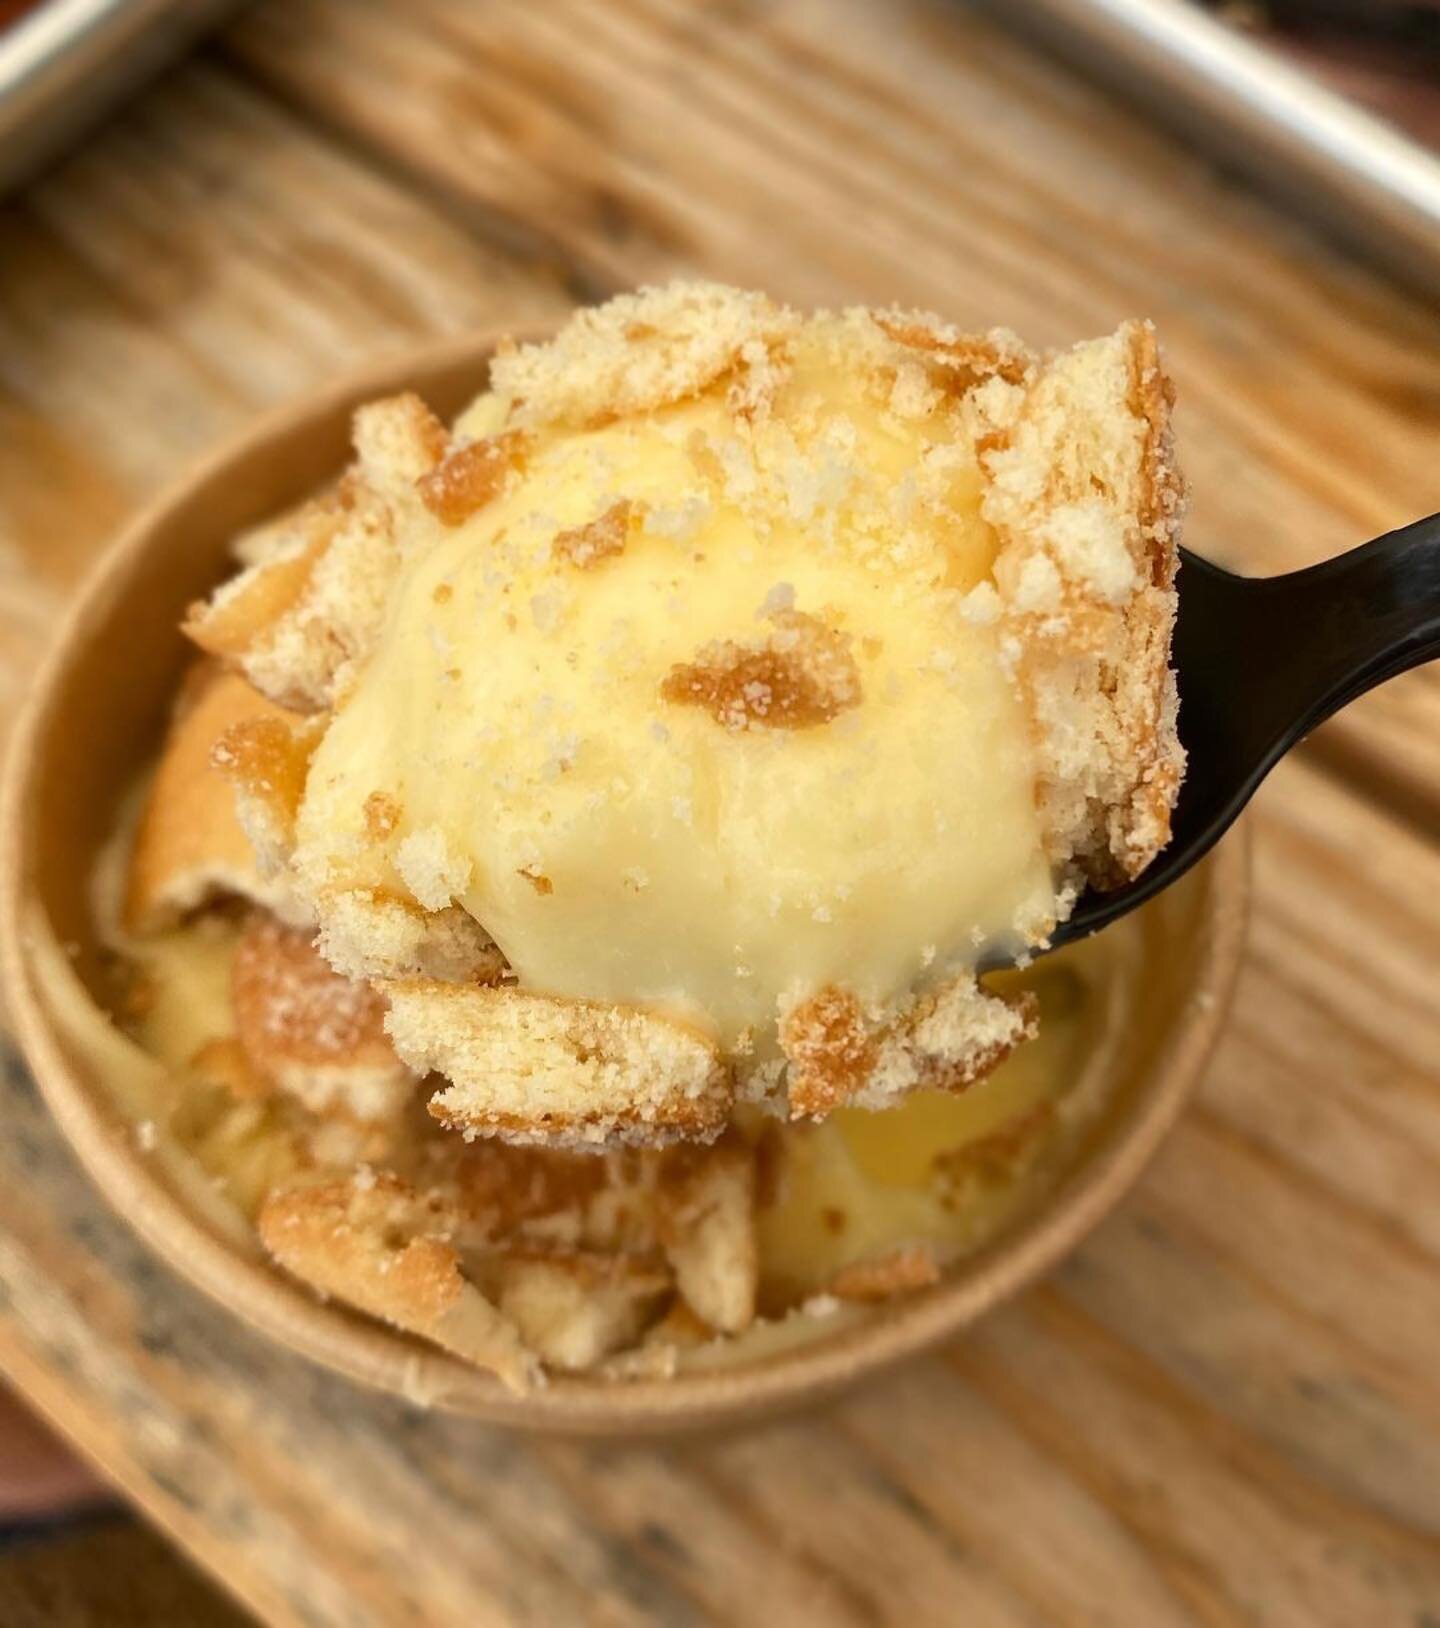 #Pudding Time!

#Friyay #BananaPudding #Dessert #TexasBBQ #Summer

📷 @chompdallas